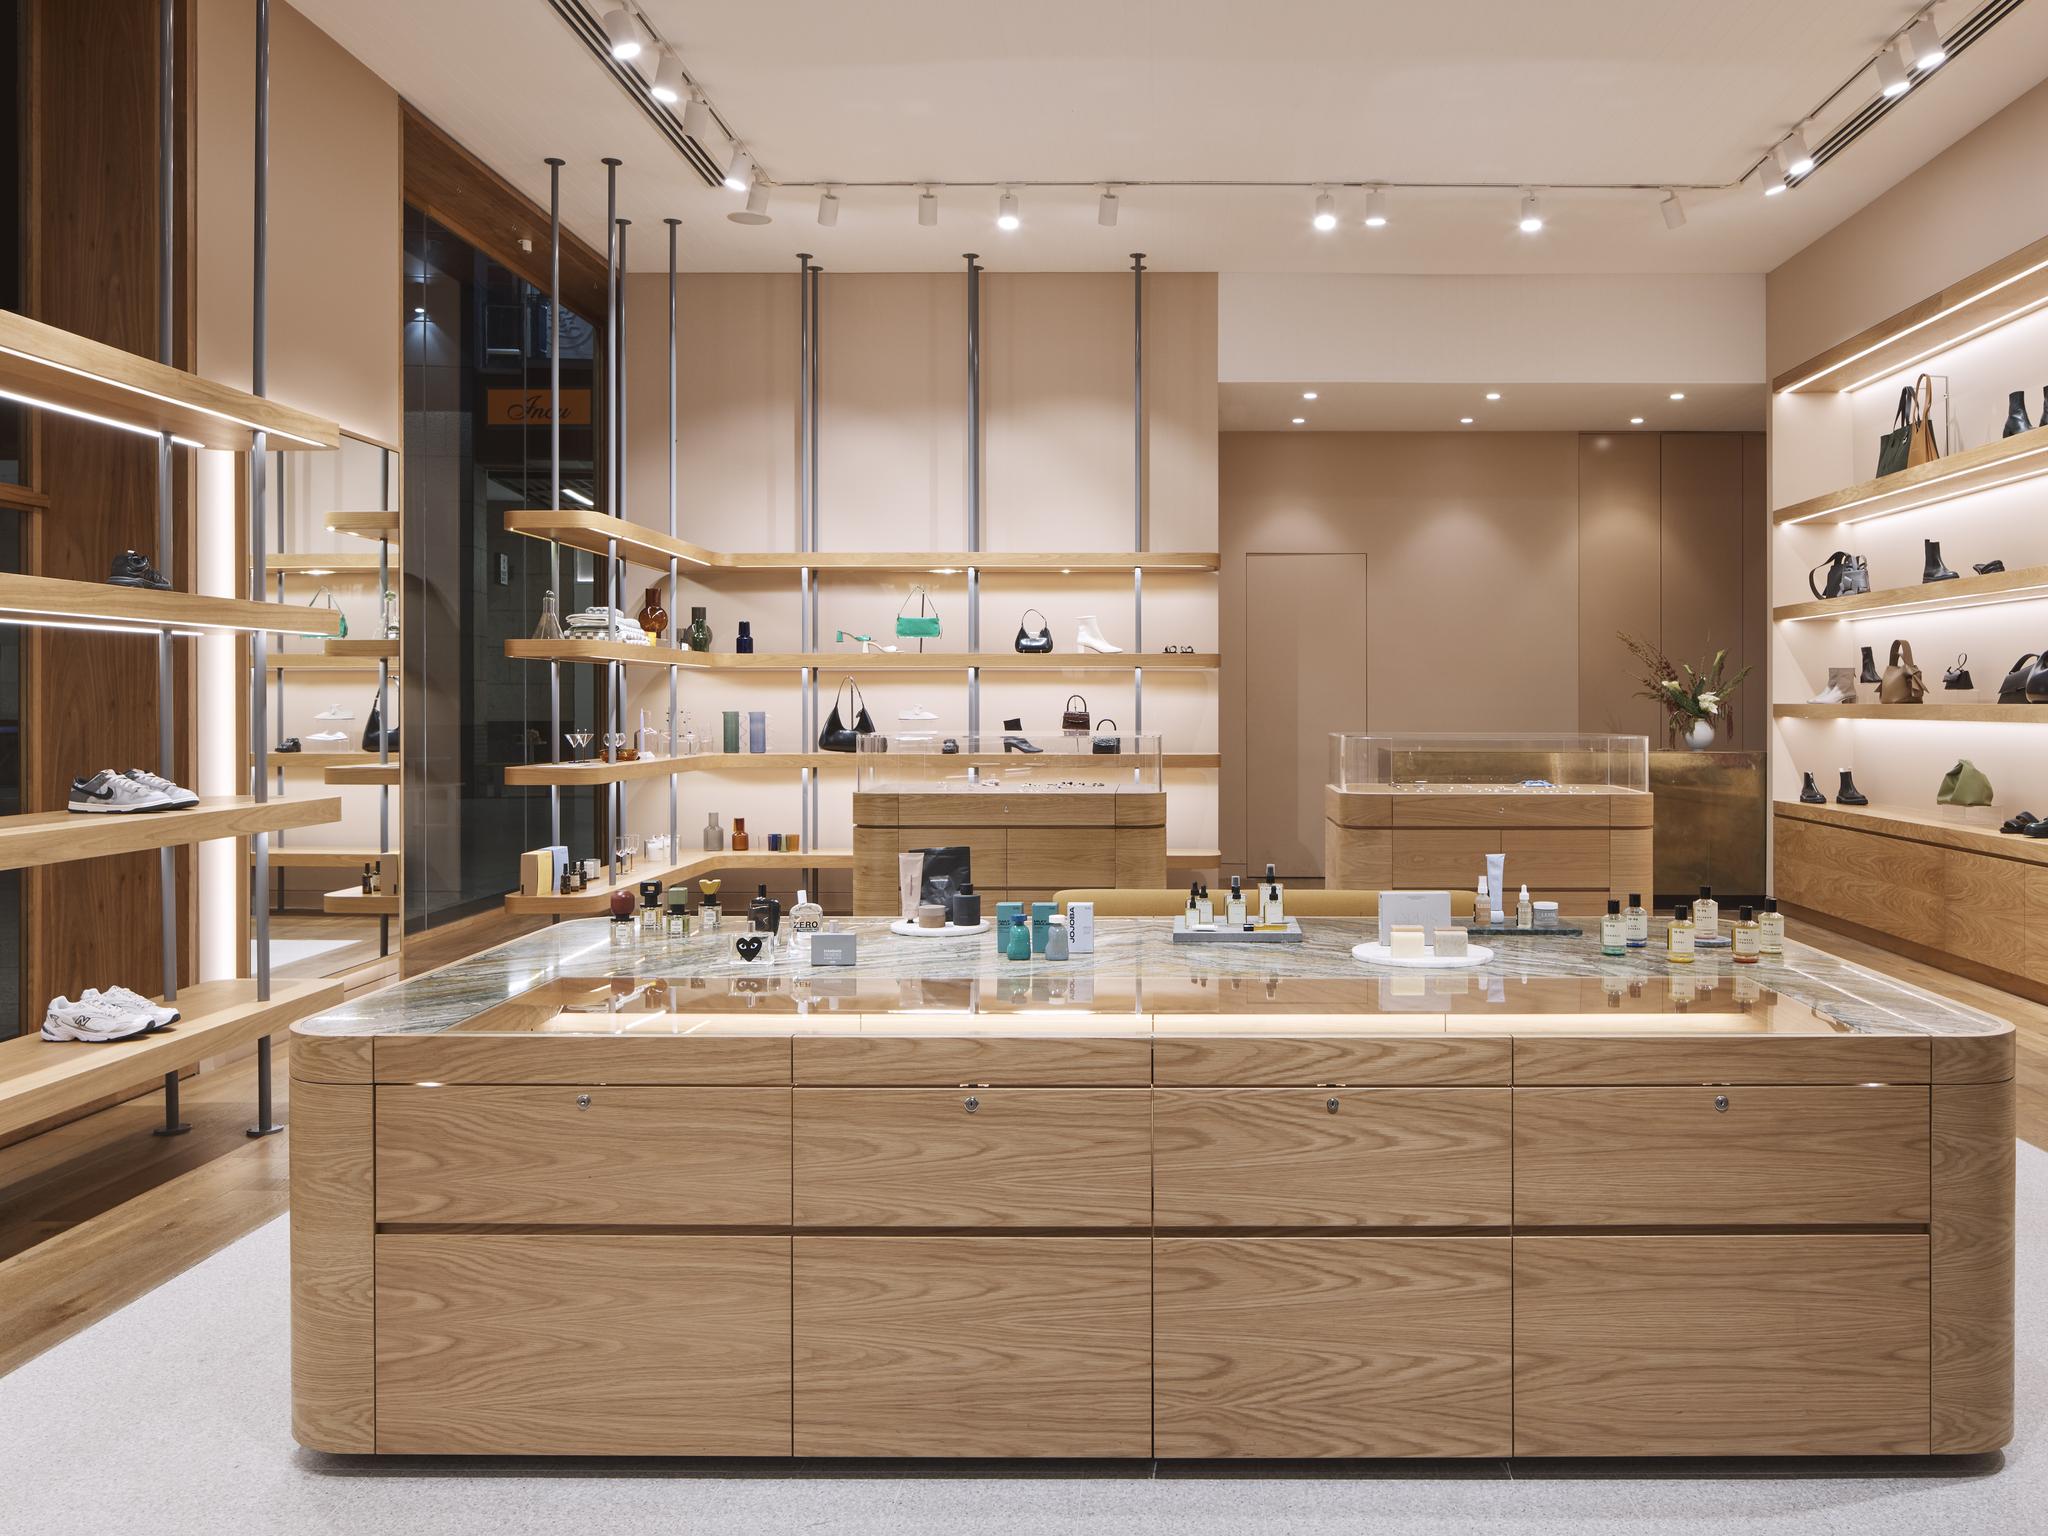 Celine opens its first Brisbane pop-up store - Inside Retail Australia